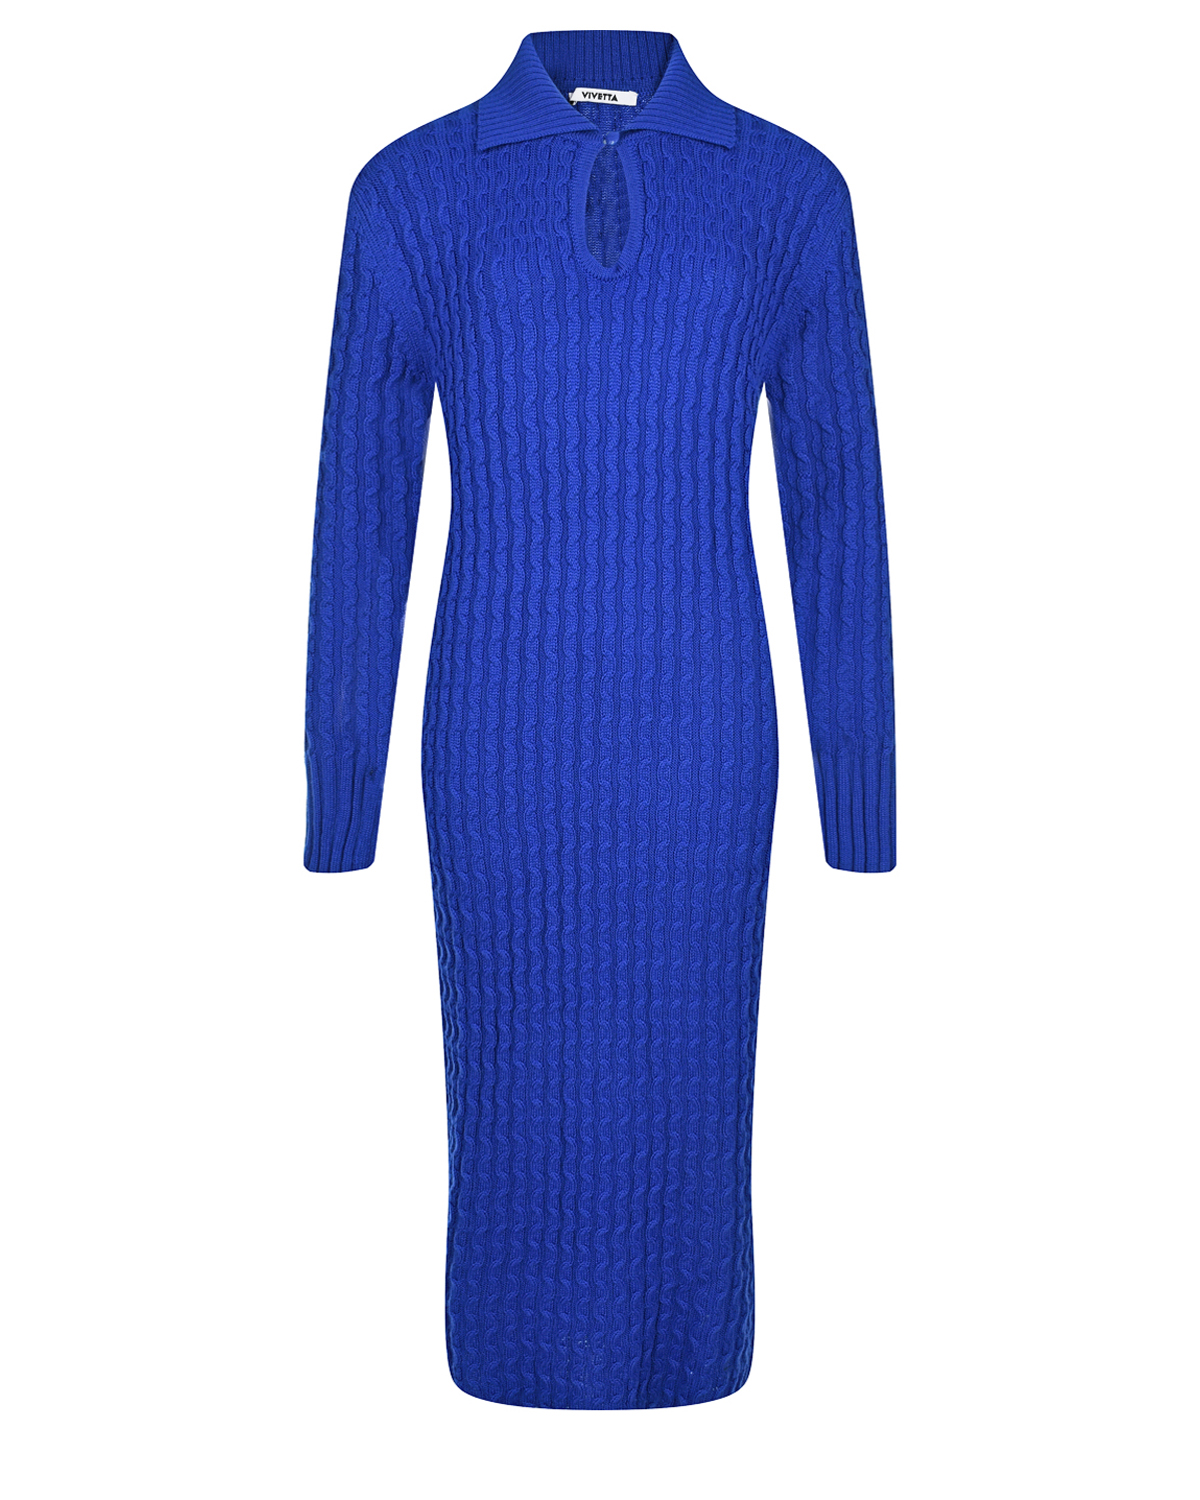 Ярко-синее платье из трикотажа Vivetta, размер 42, цвет нет цвета - фото 1